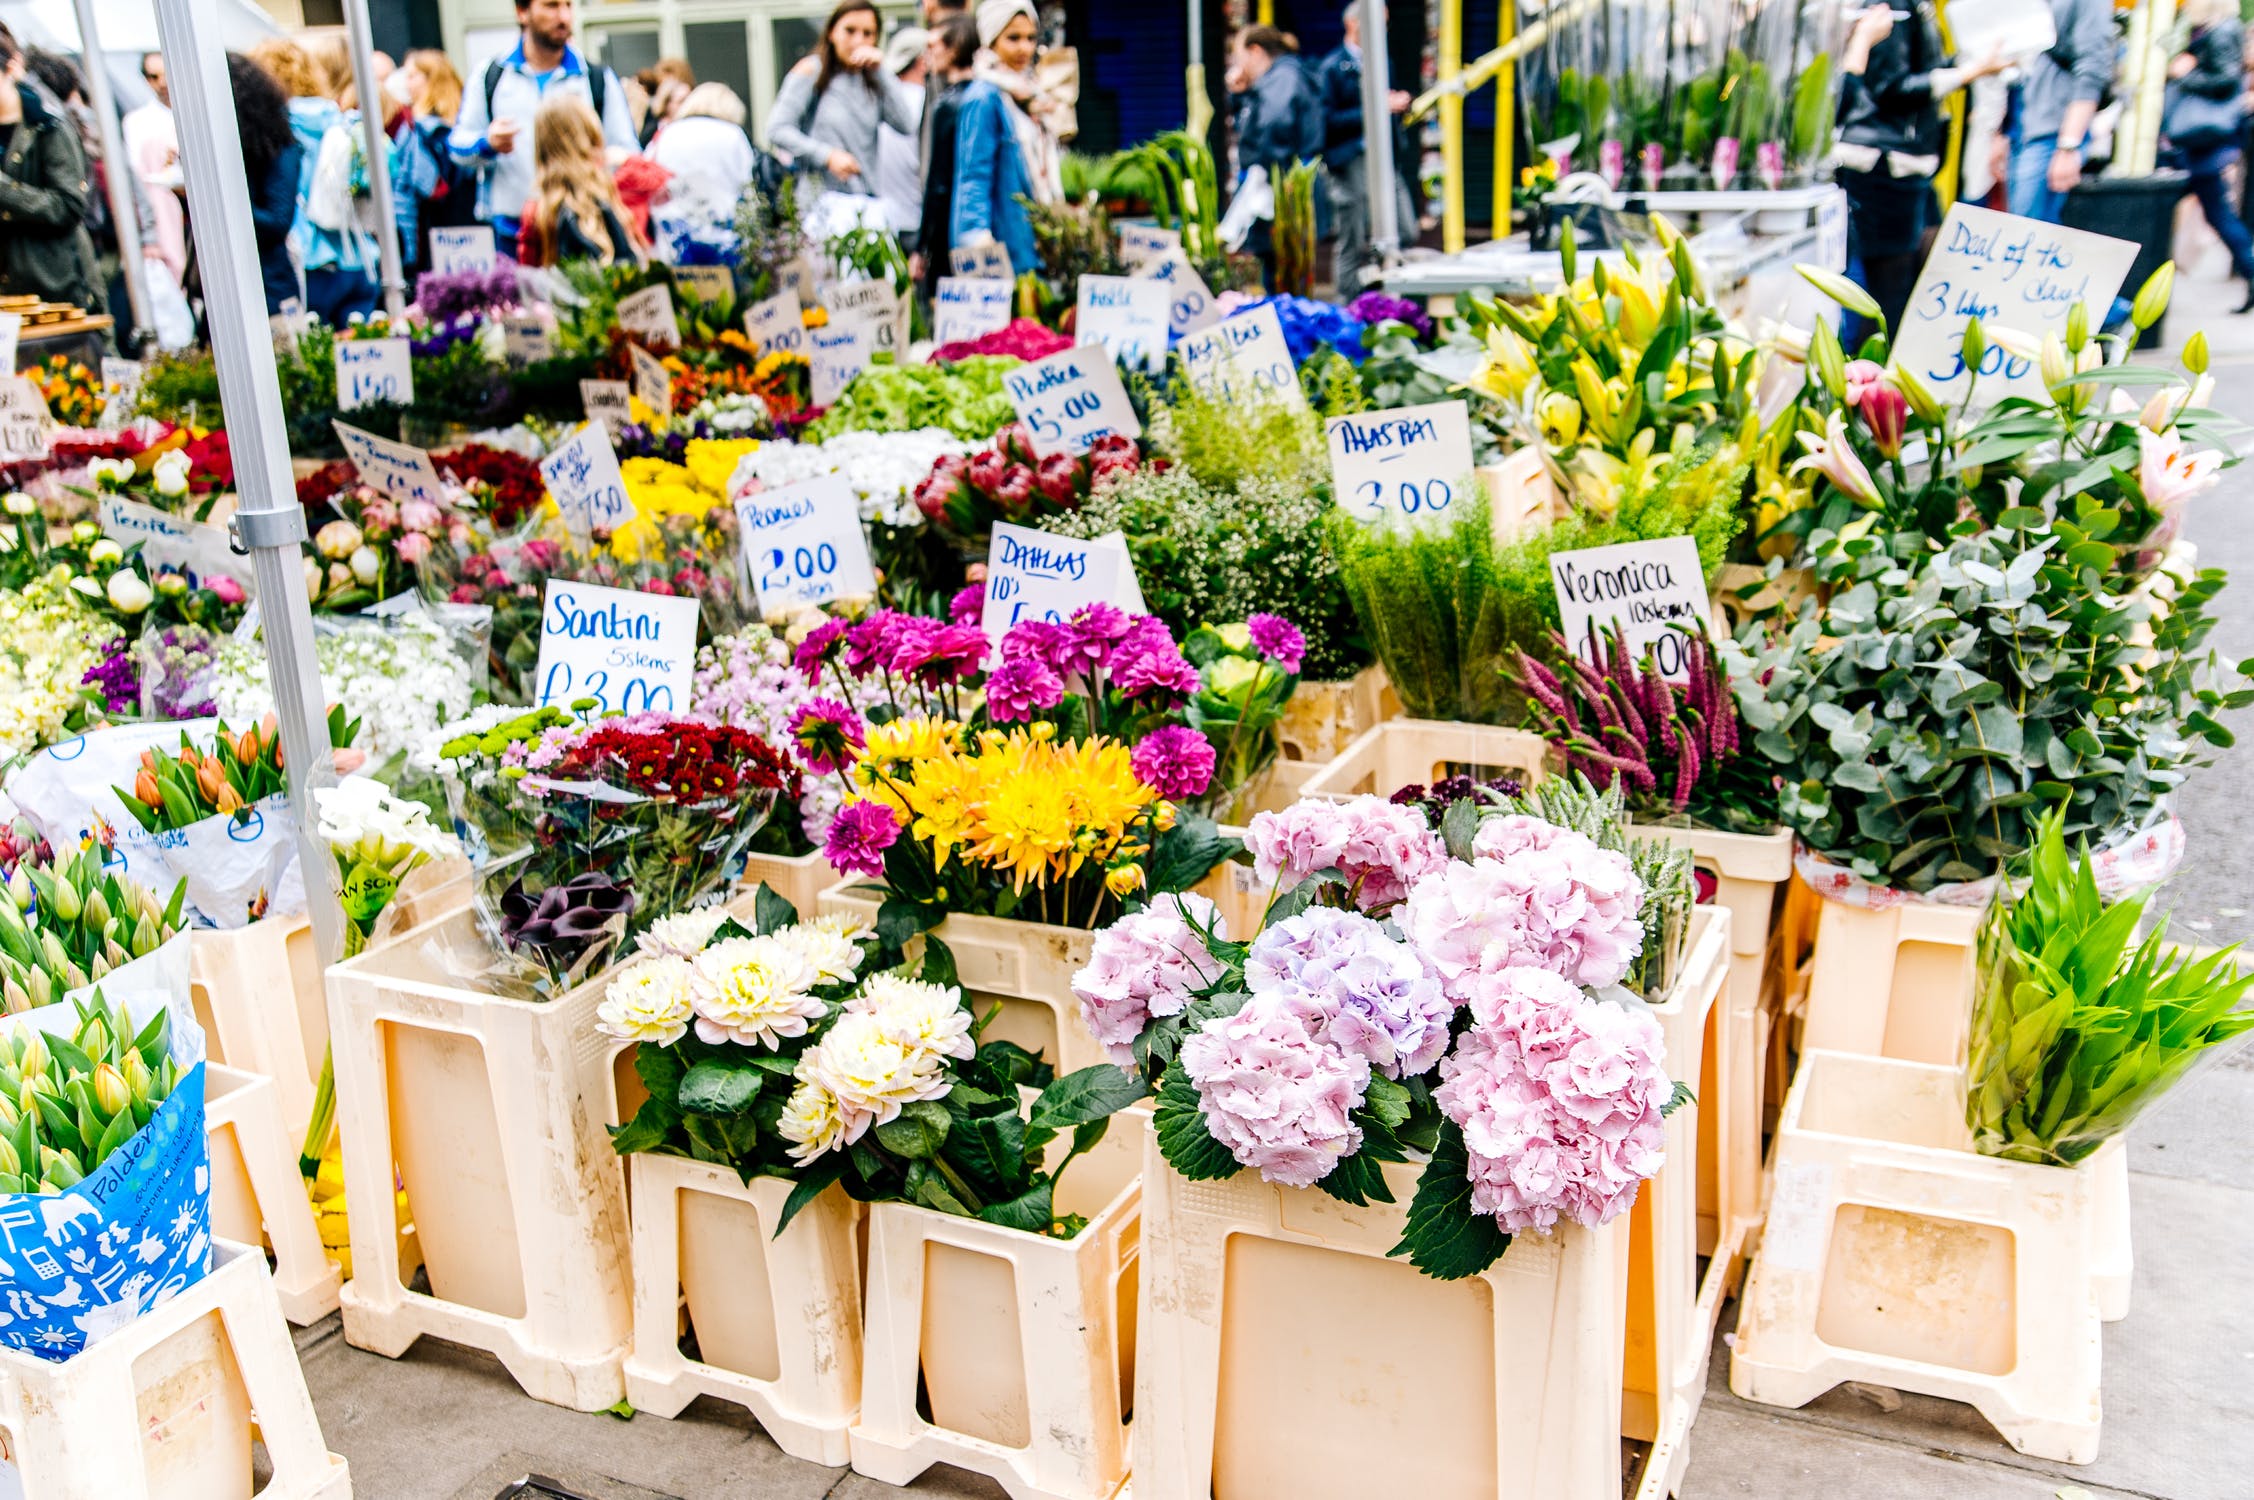 Flowers arranged in buckets at a flower market